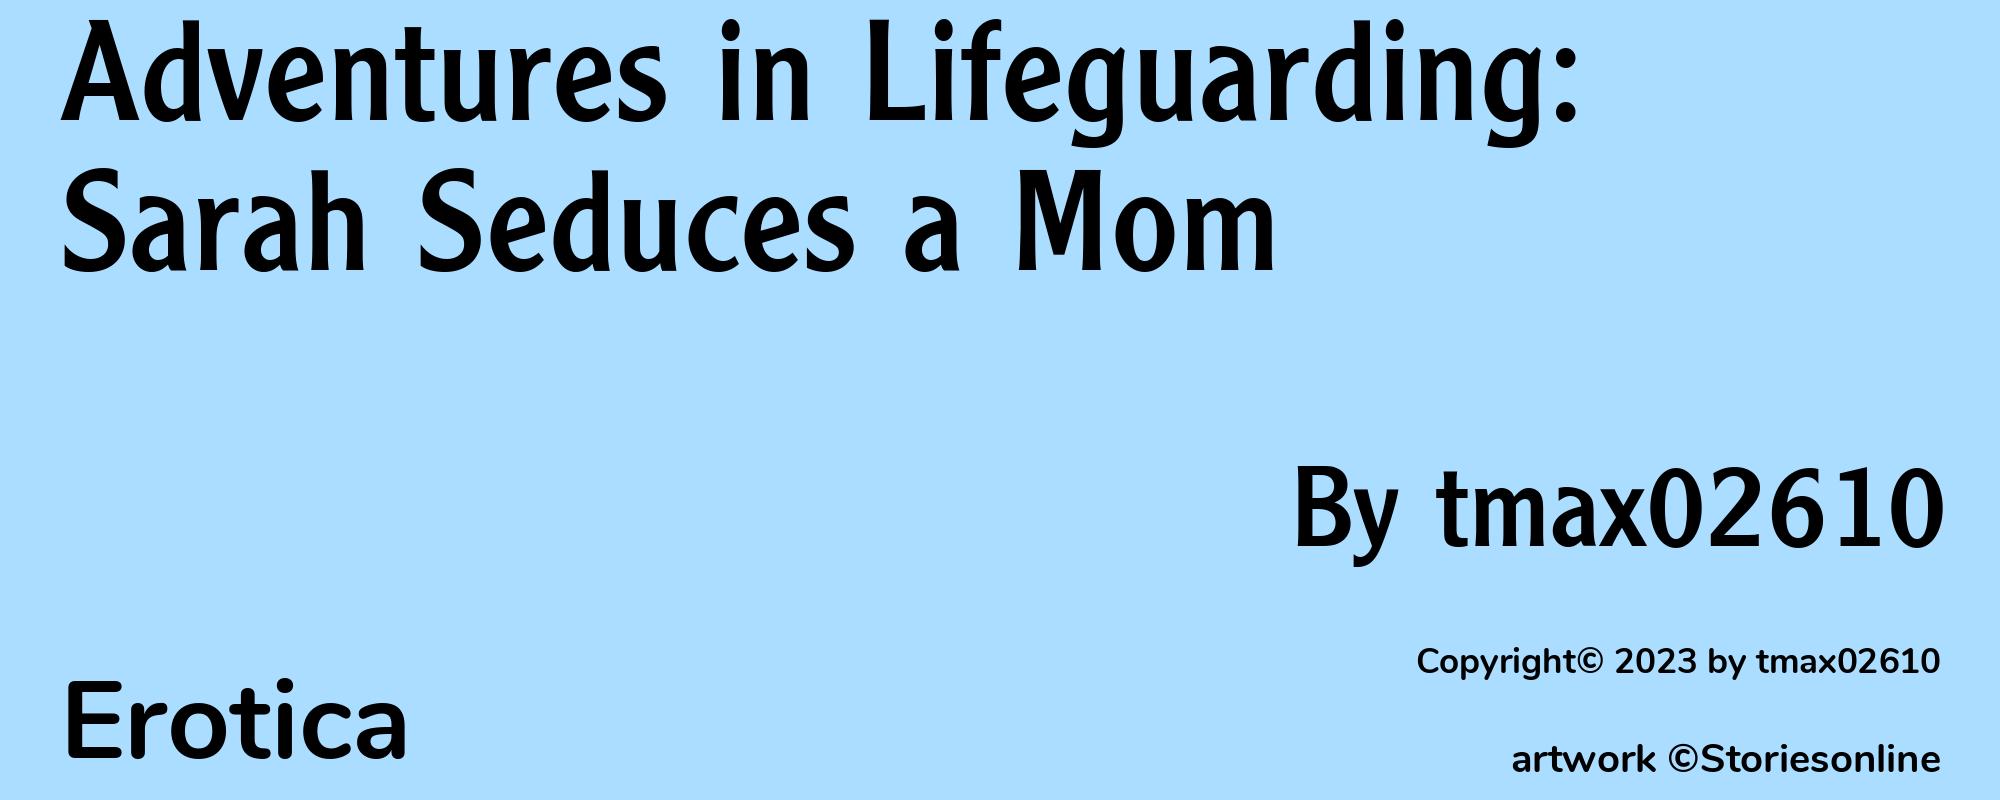 Adventures in Lifeguarding: Sarah Seduces a Mom - Cover